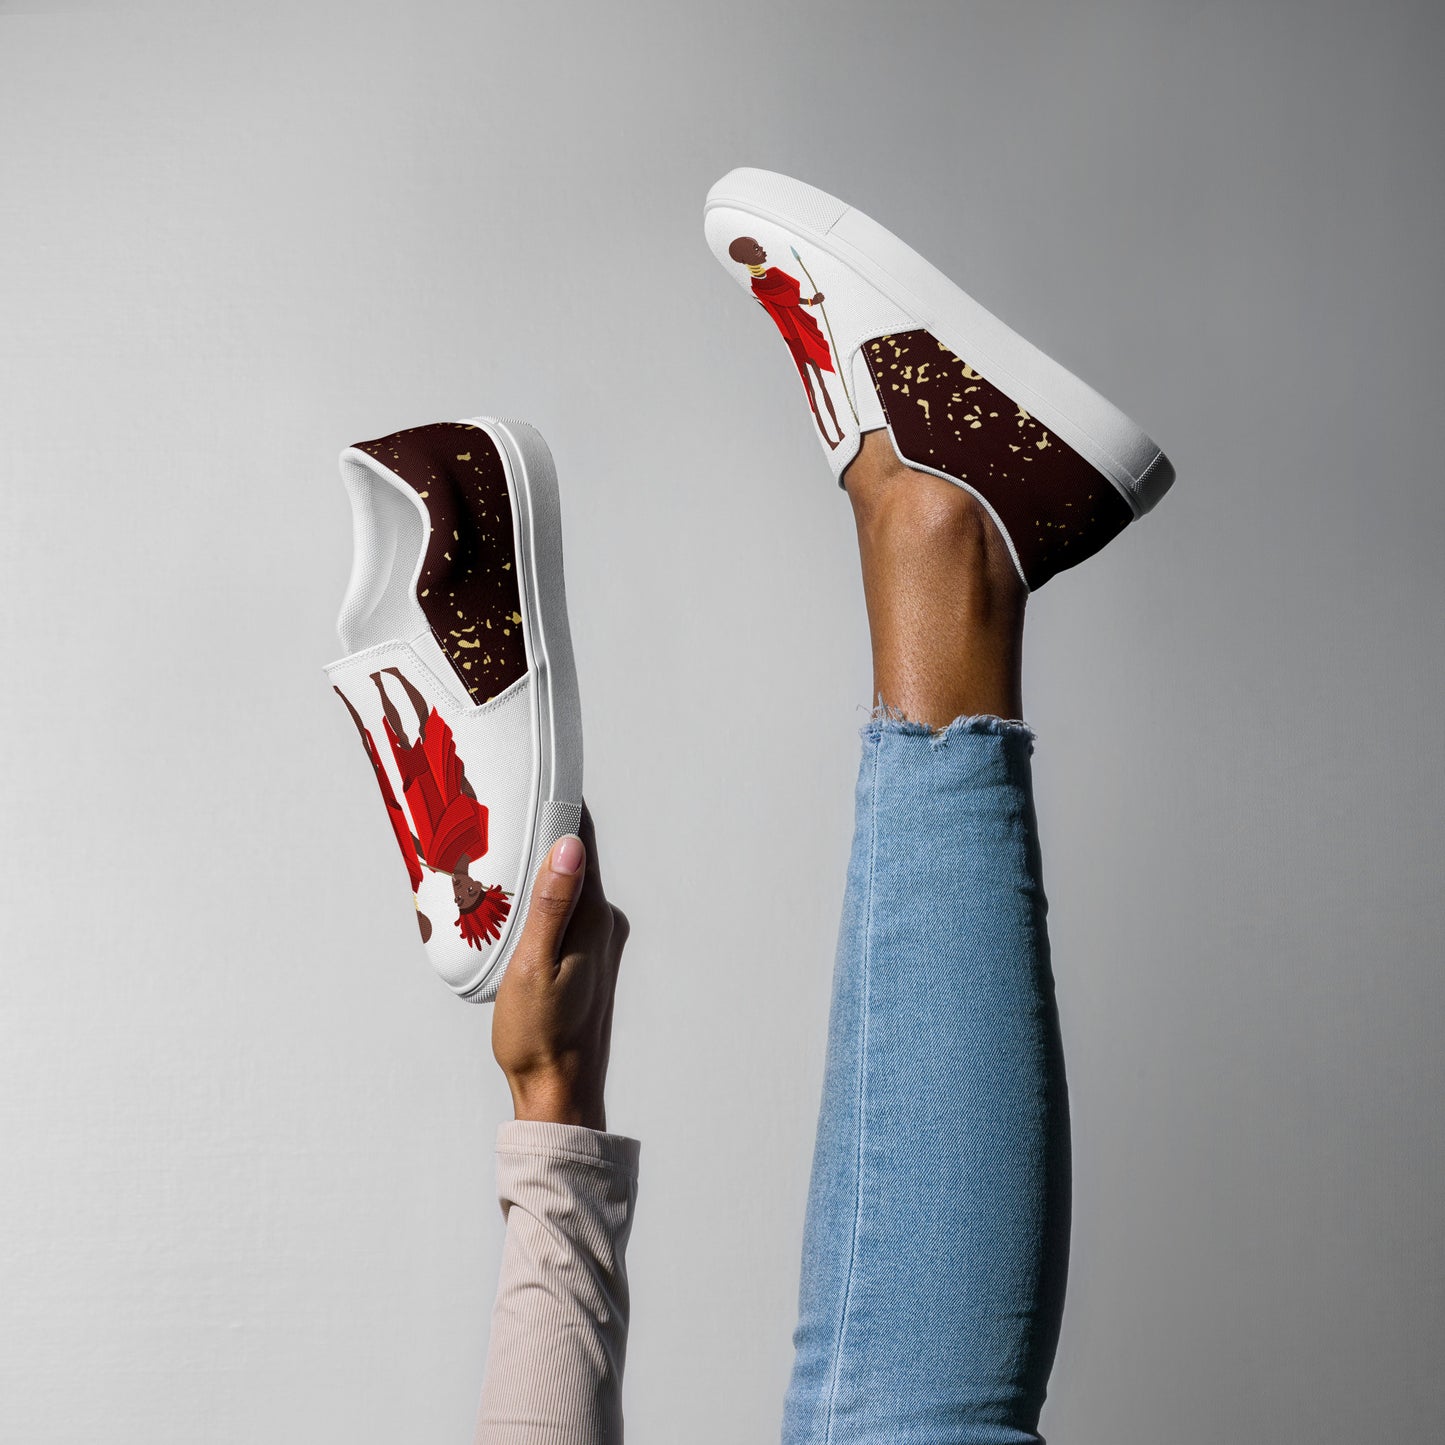 Agojie Burgundy Women’s Slip-On Canvas Shoes